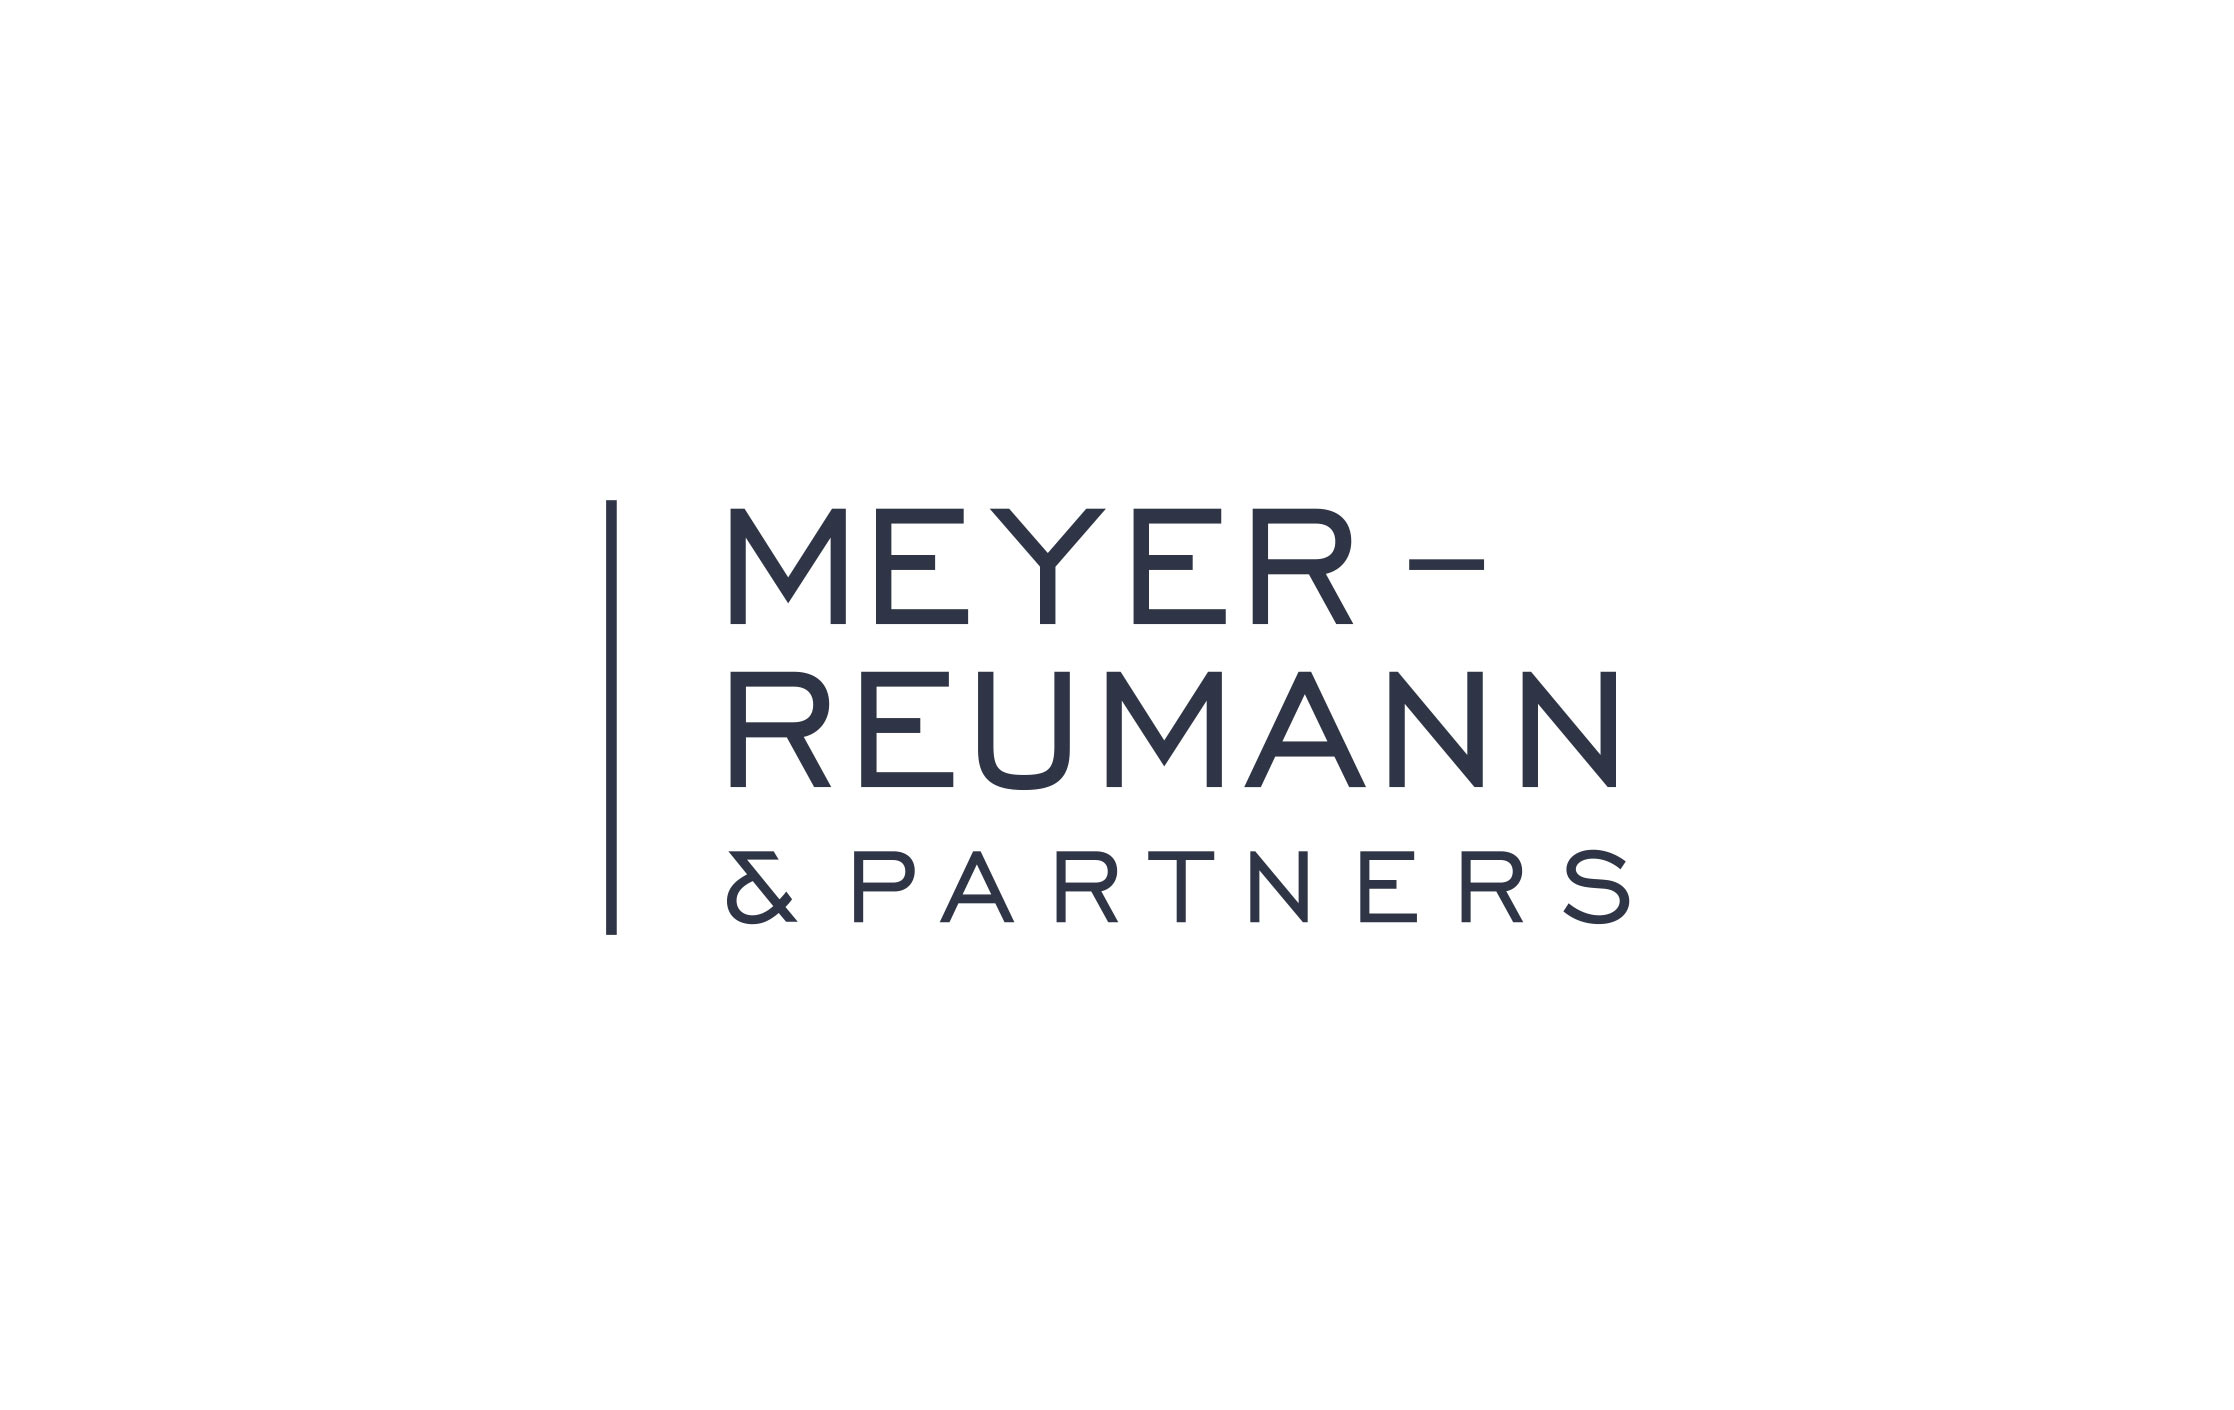 Meyer-Reumann & Partners, Deutsche Anwaltskanzlei